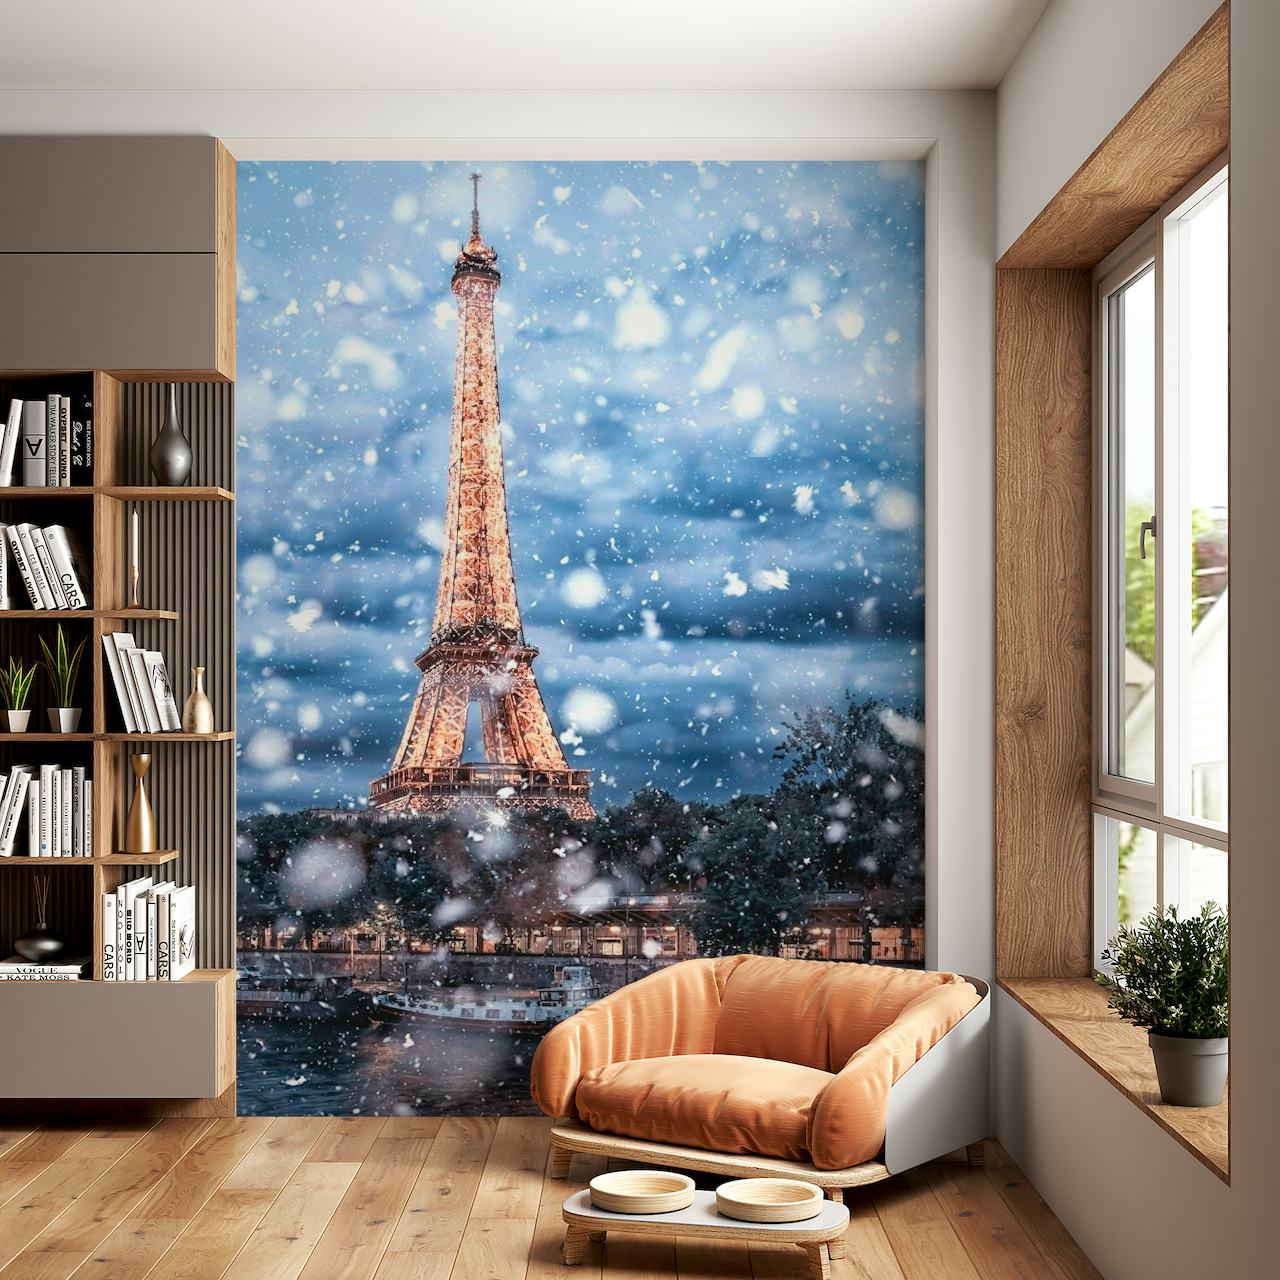 Snowing In Paris wallpaper